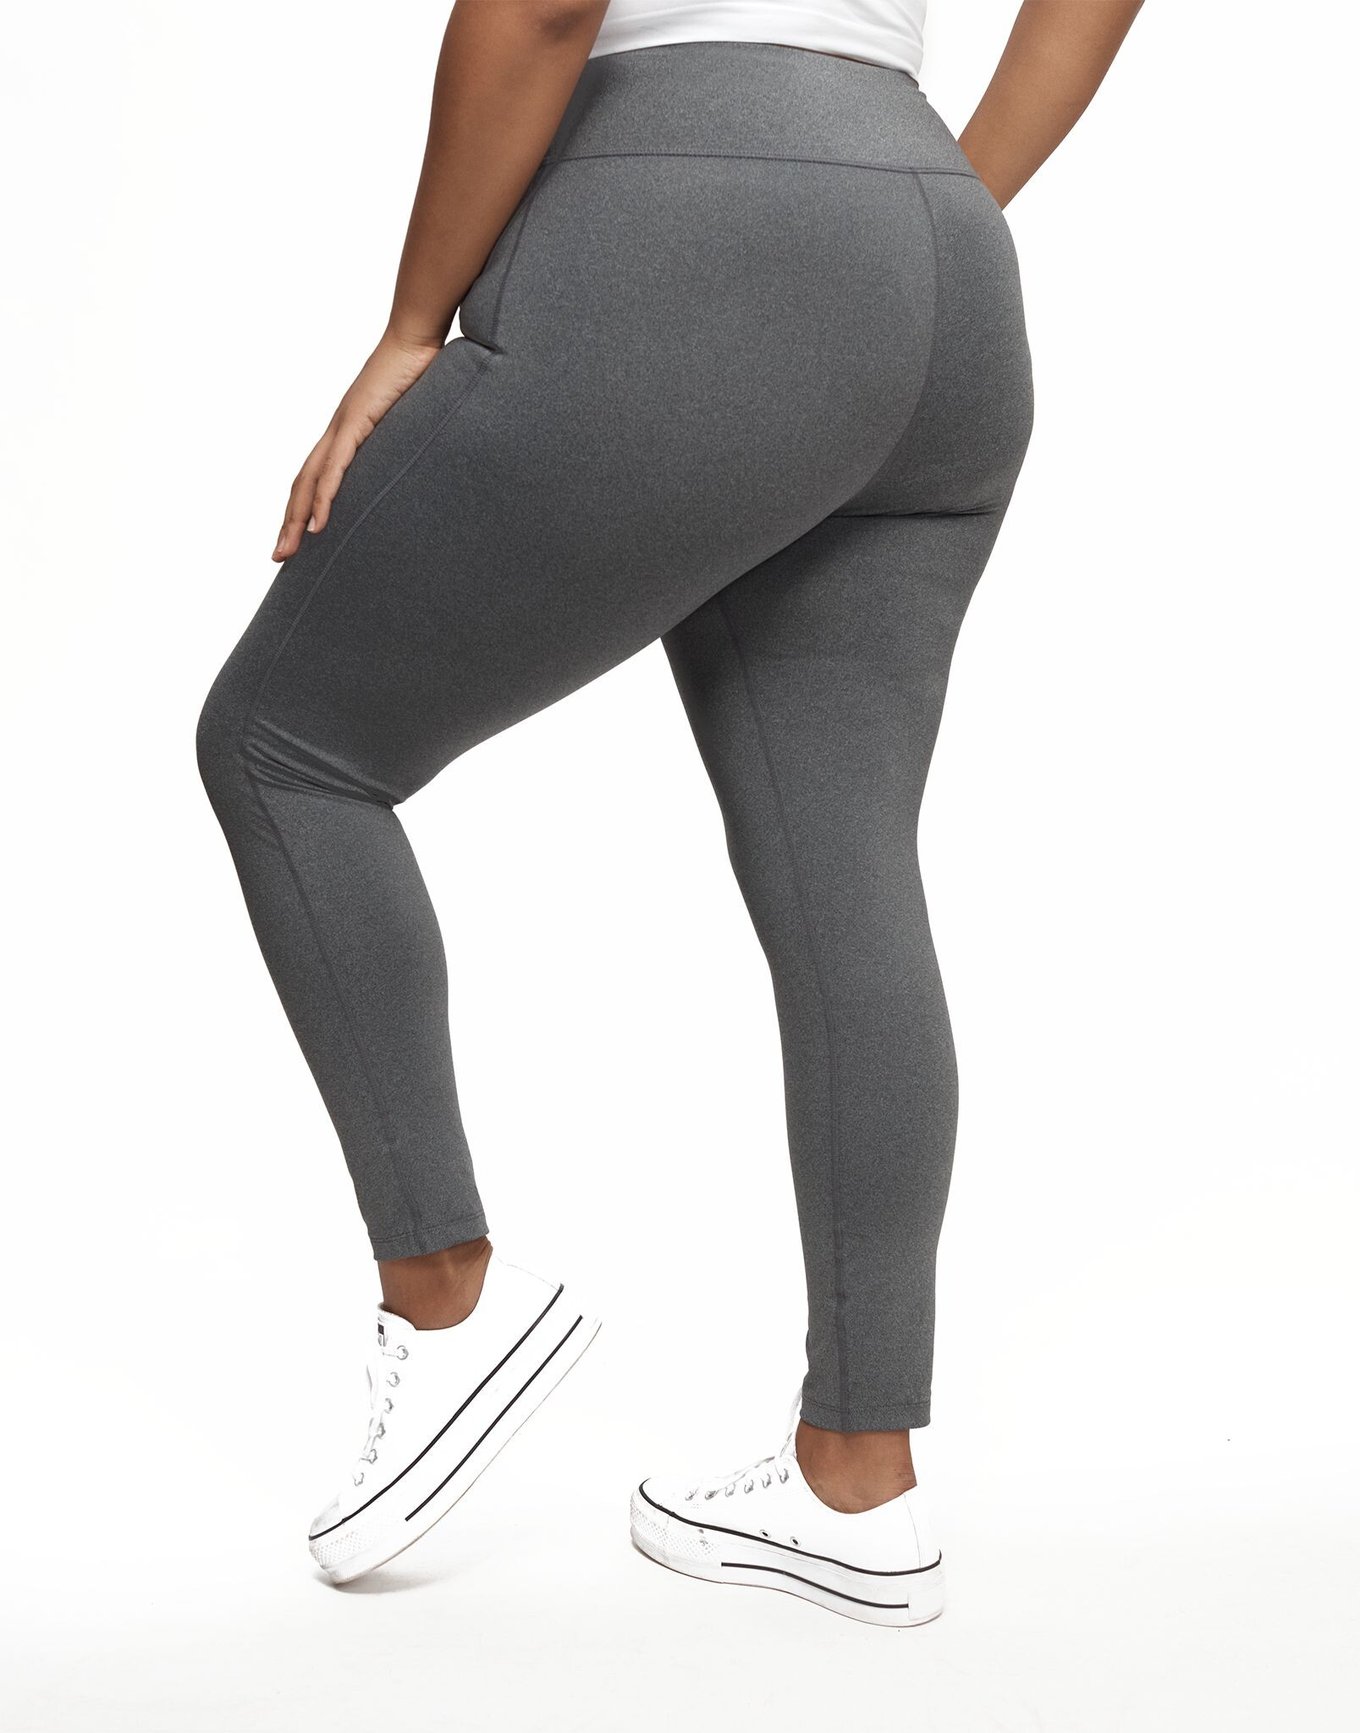 Women's Pack of 2 Multicolor Solid Tights |Activewear|Yogawear|Gymwear| Sportswear|